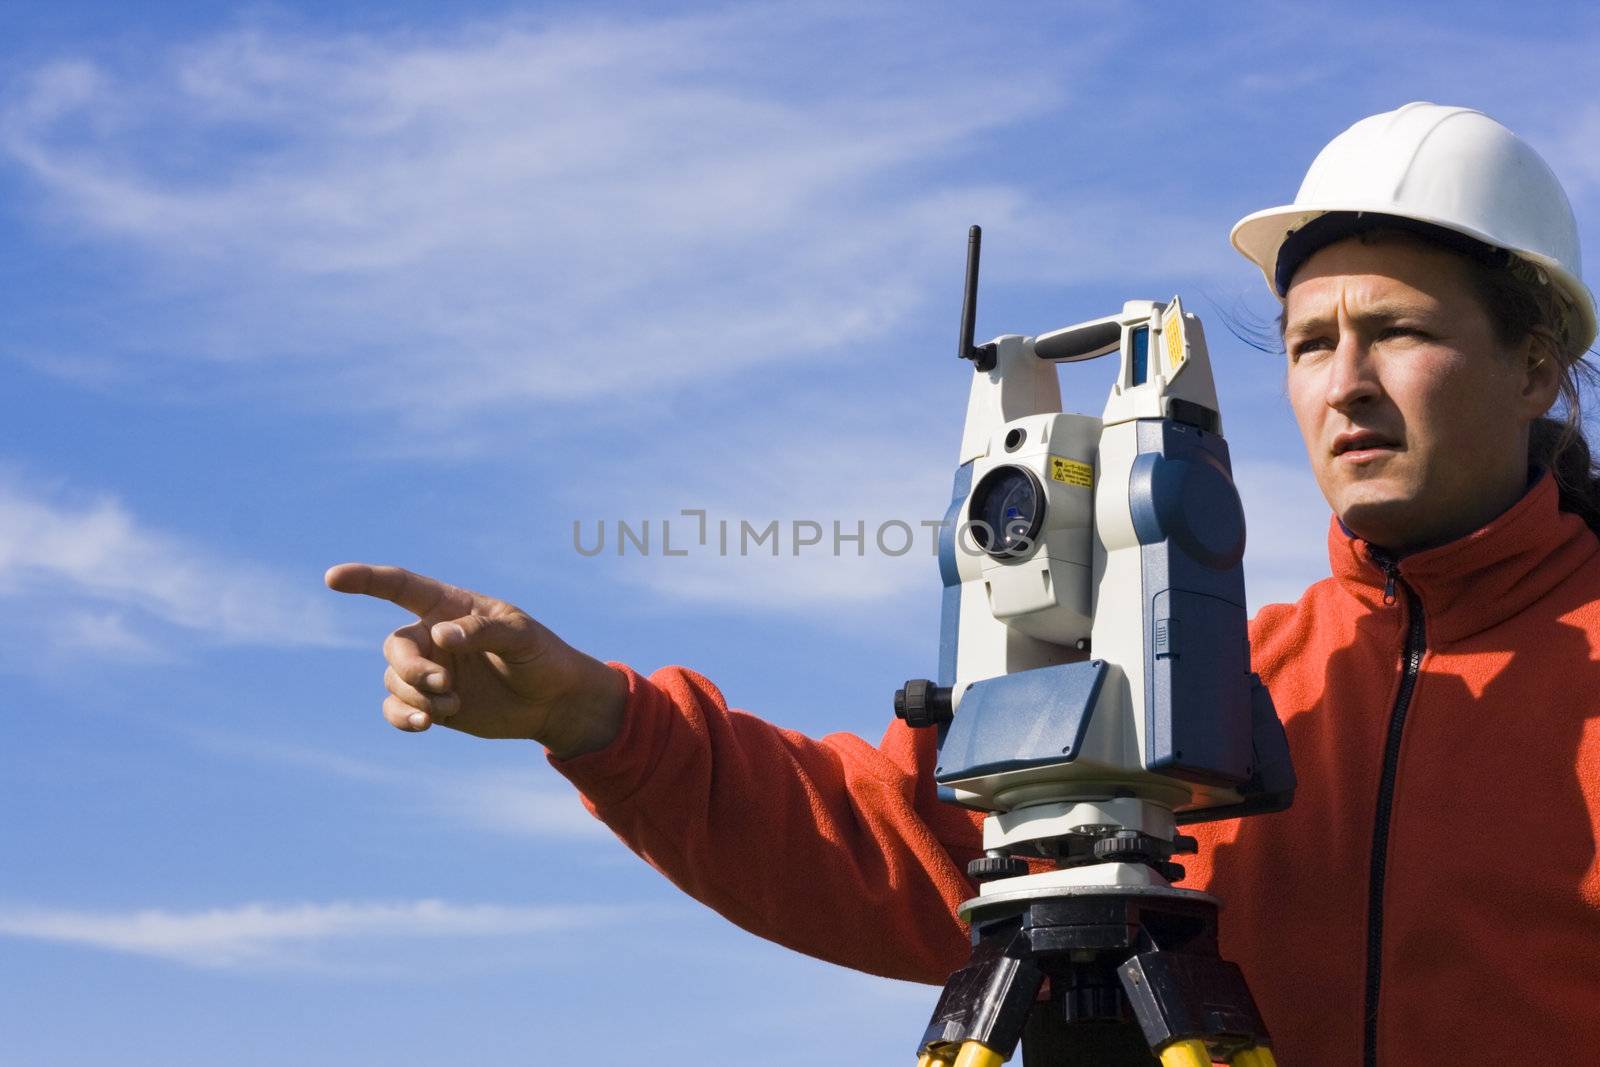 Land Surveyor in the field - spring surveying.